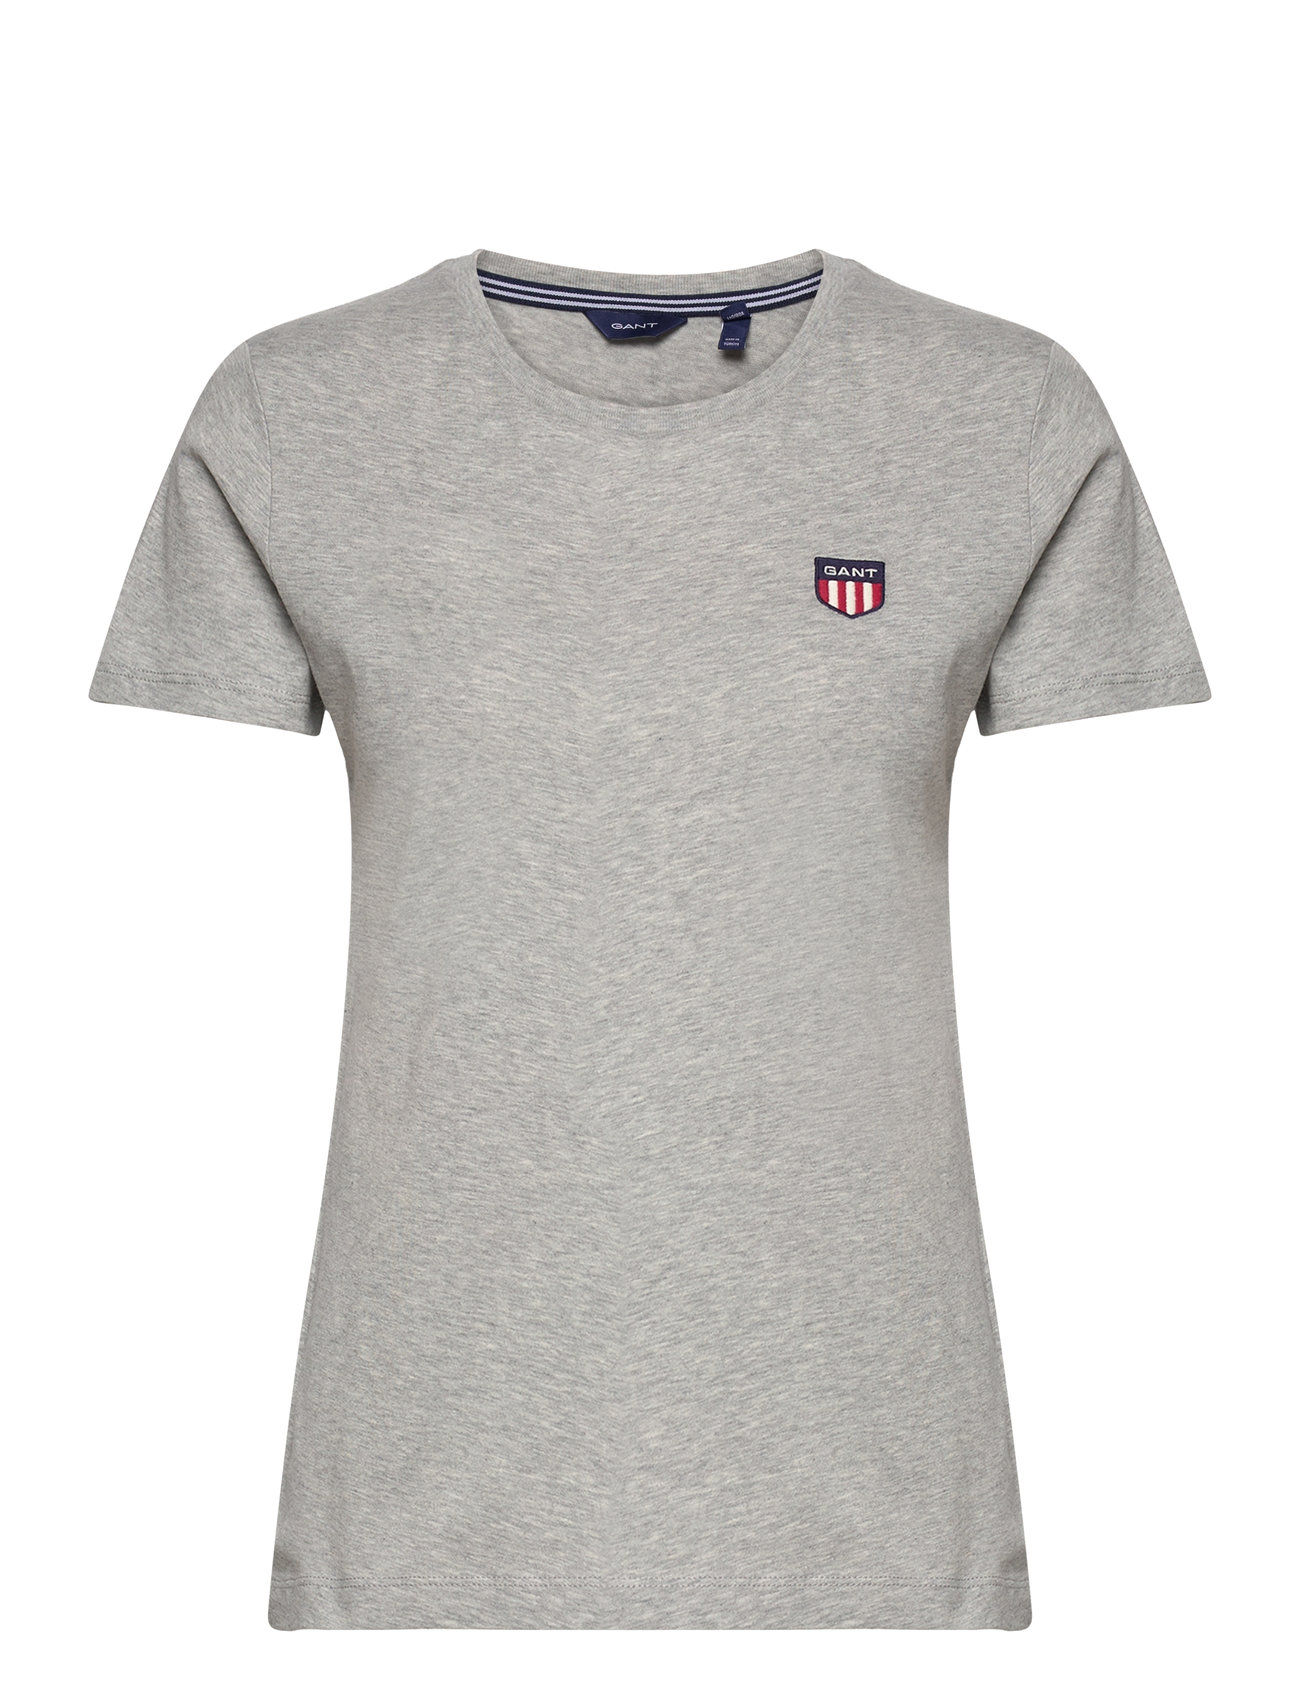 GANT Reg Retro tops – Booztlet – Shield t-shirts T-shirt bei einkaufen Ss 